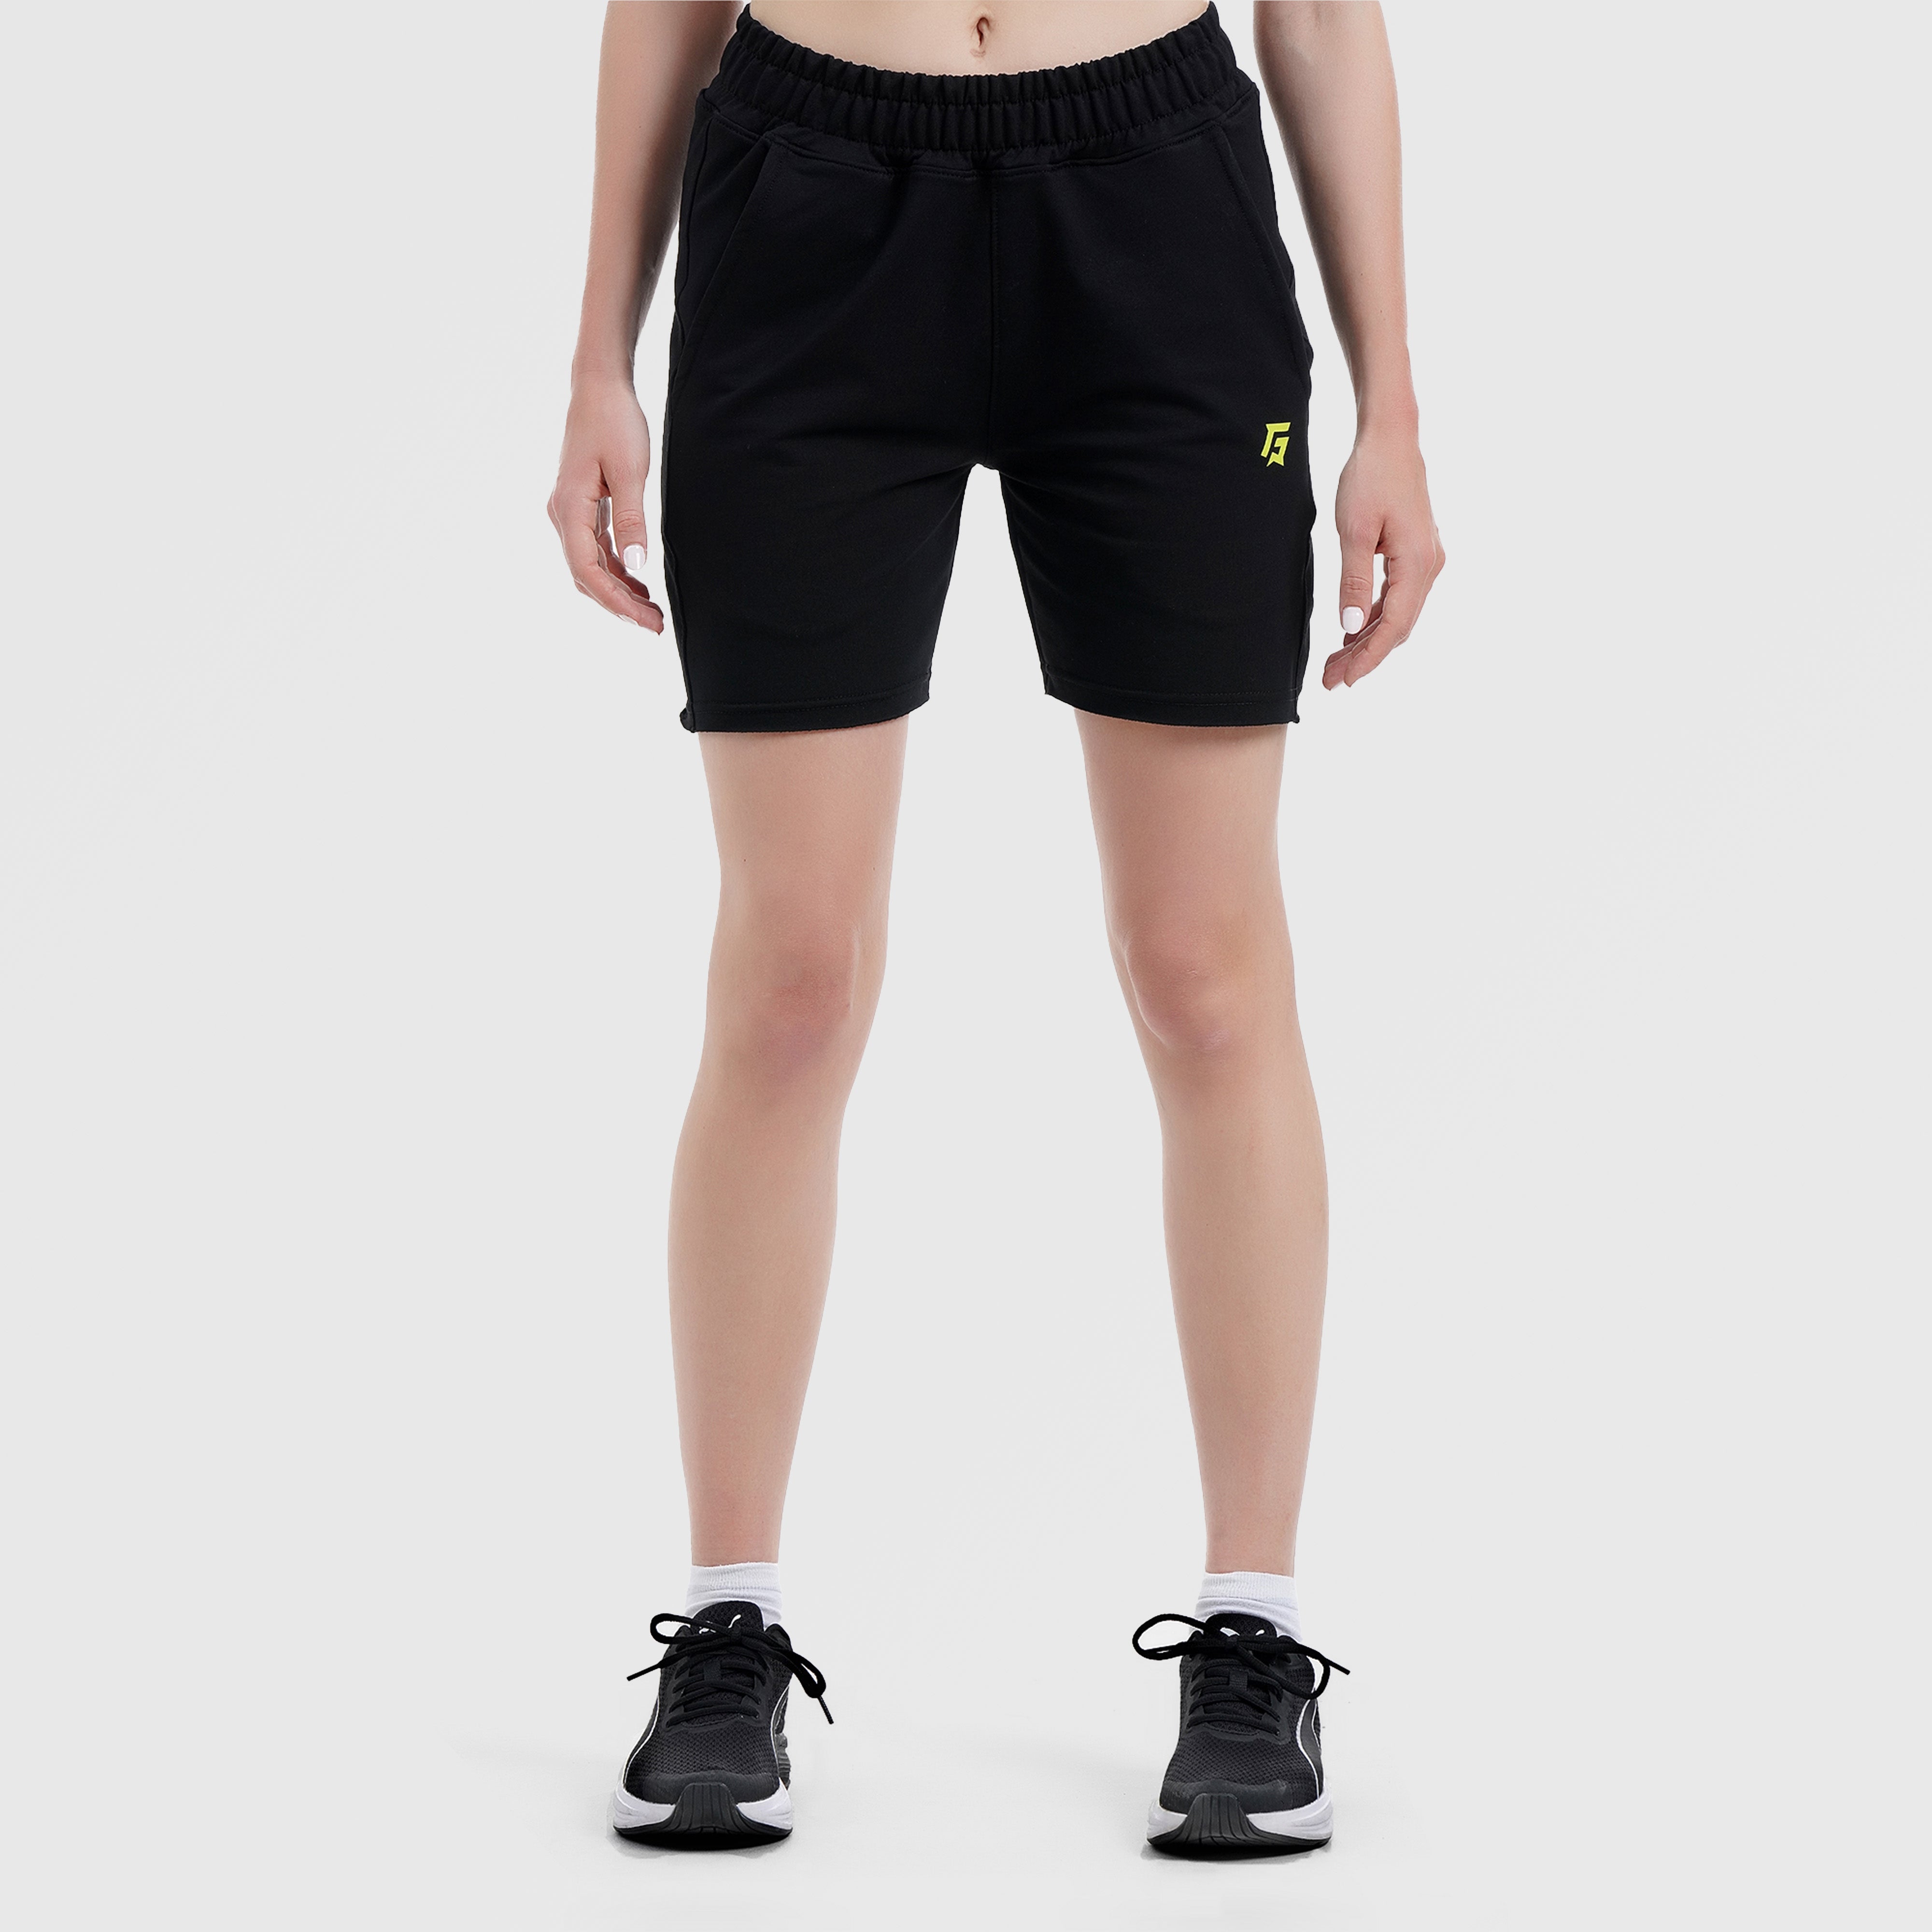 MoveEase Shorts (Black)